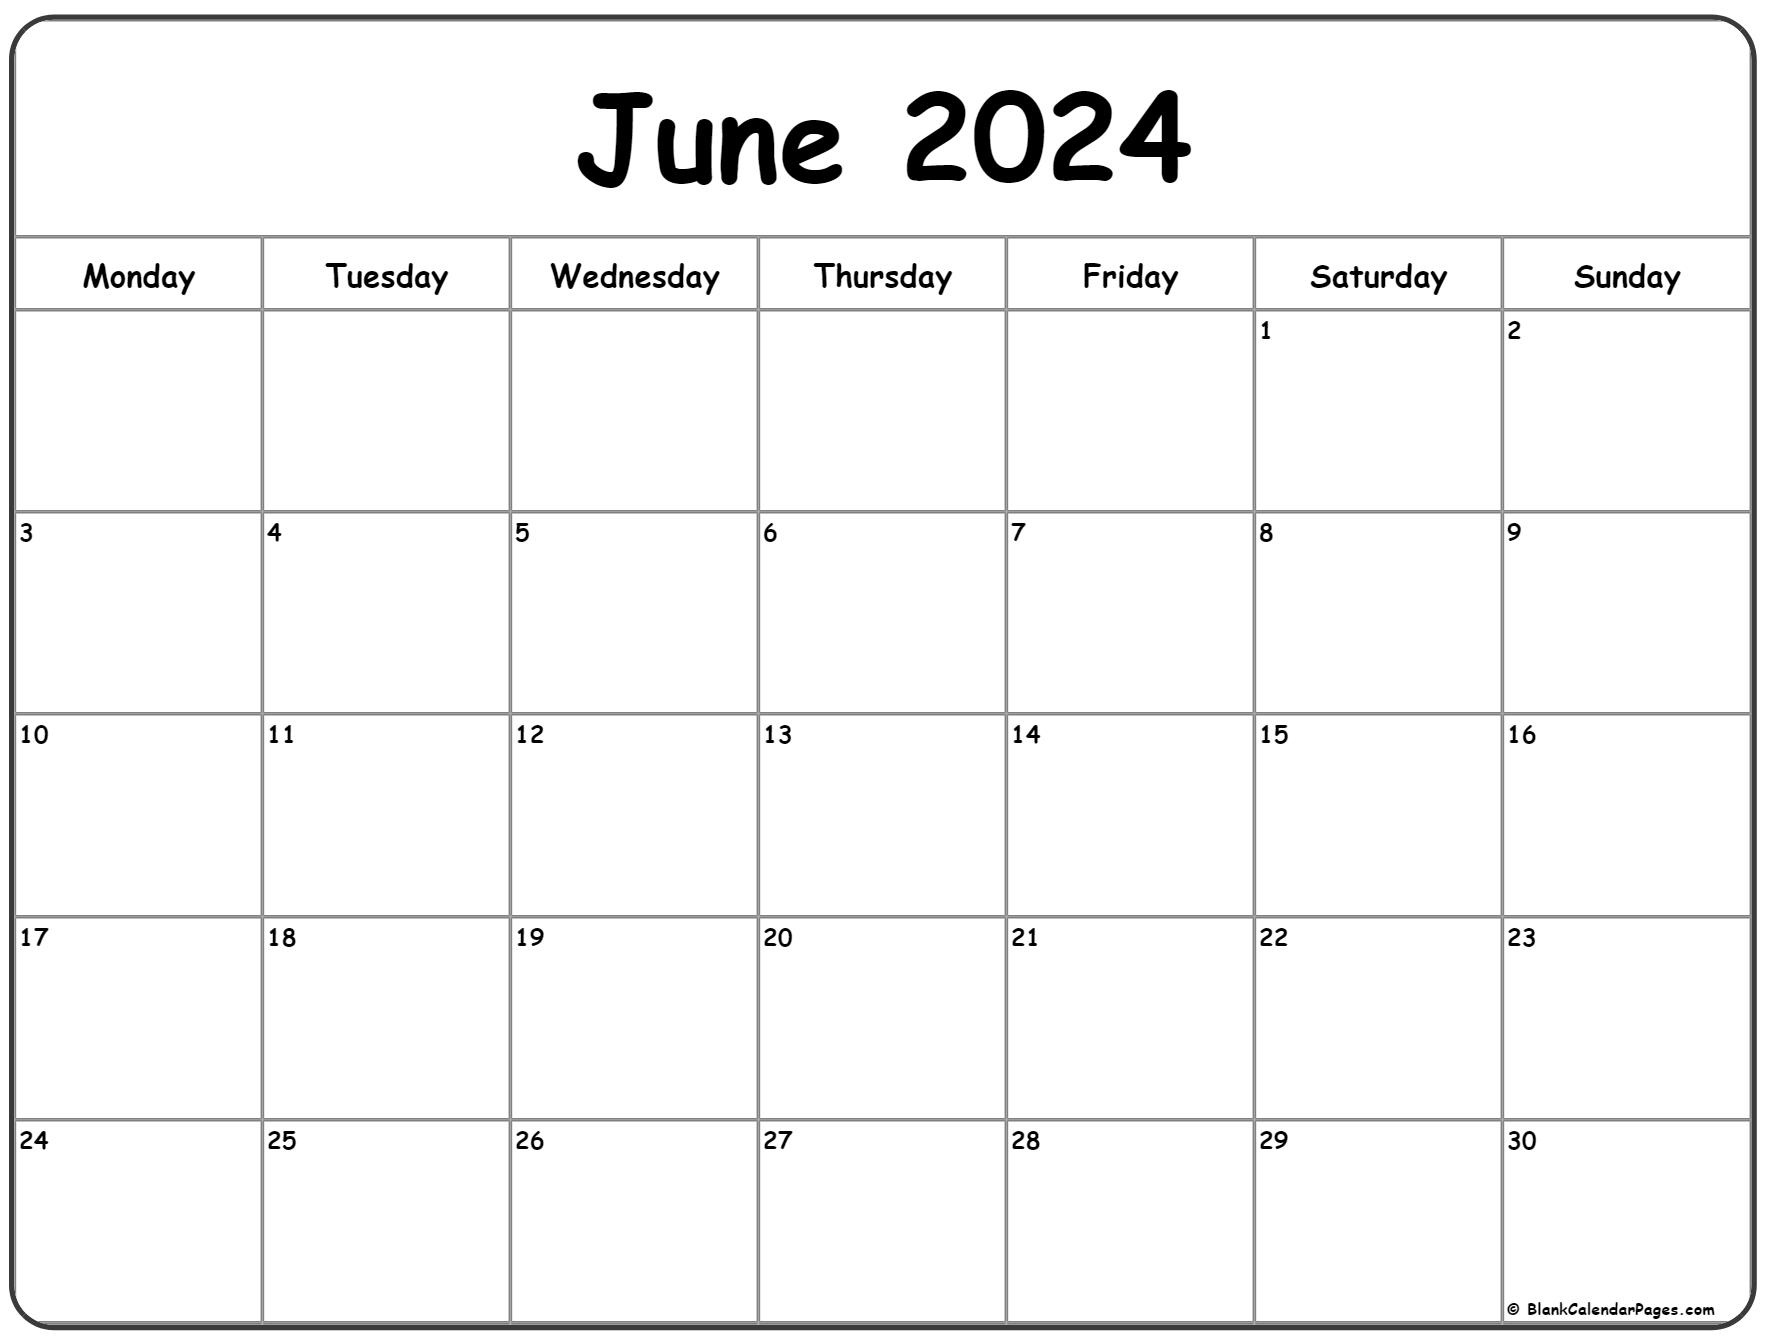 June 2024 Monday Calendar | Monday To Sunday regarding 2024 Calendar For June